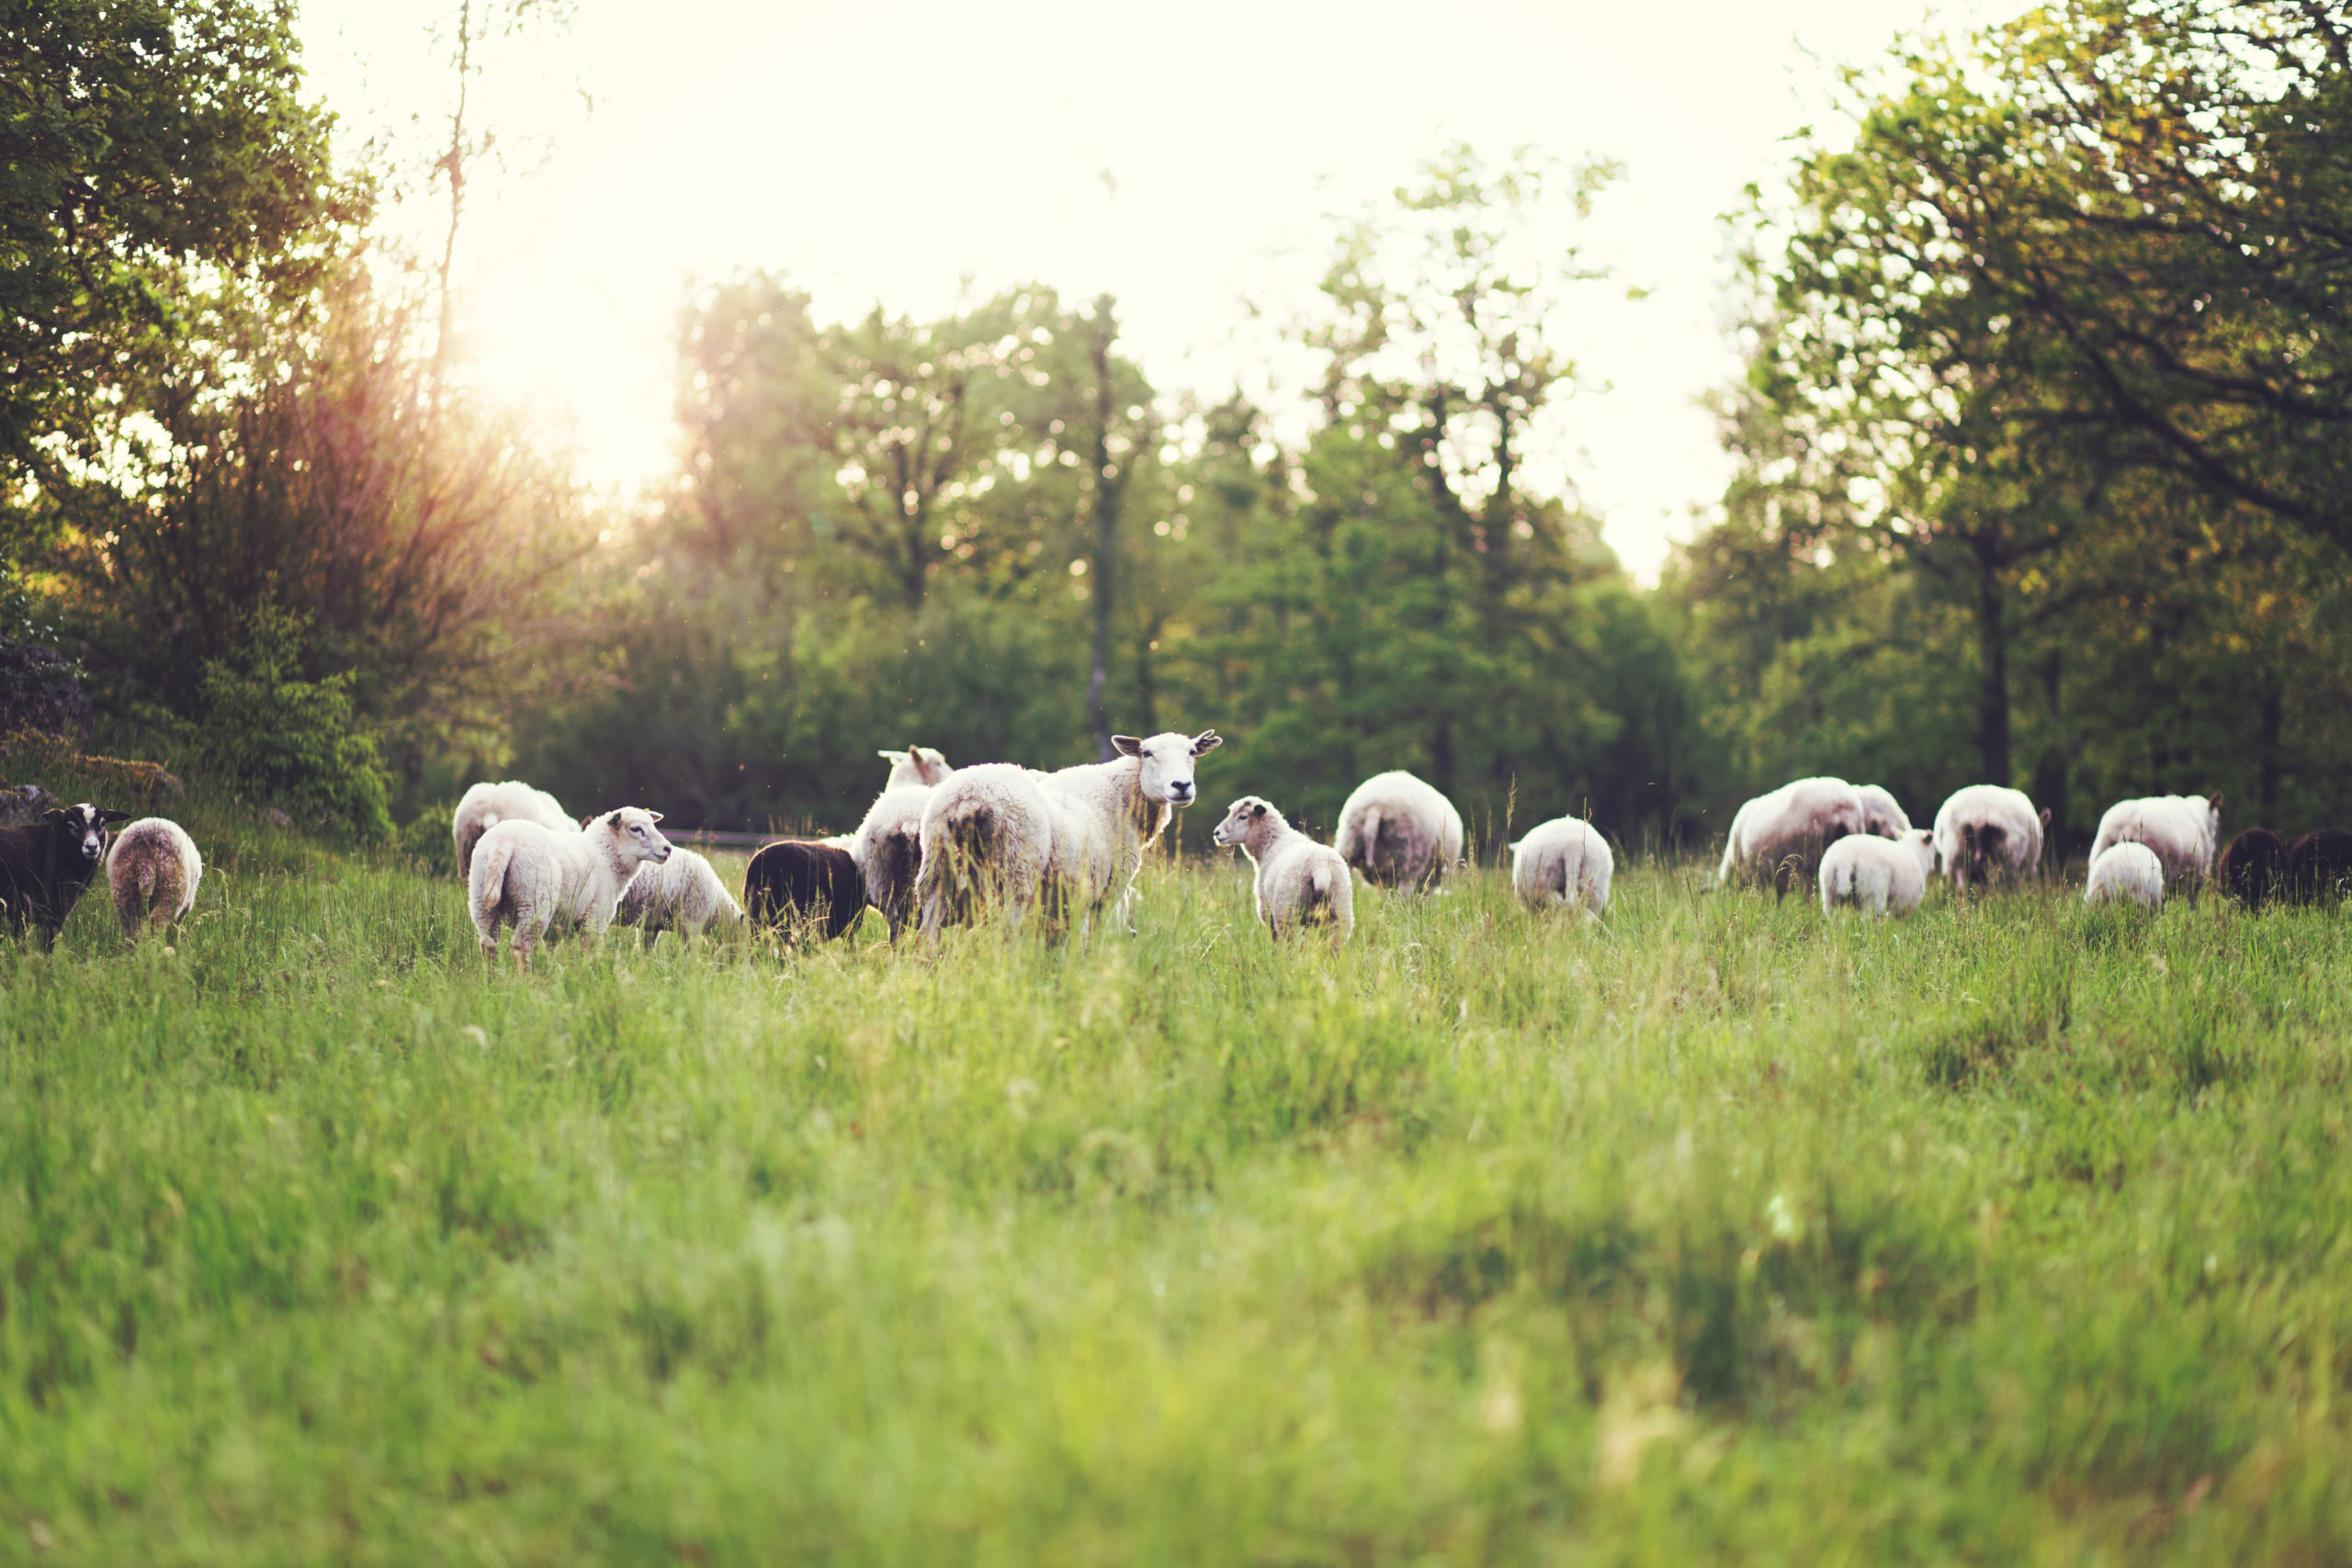 sheep in grass field